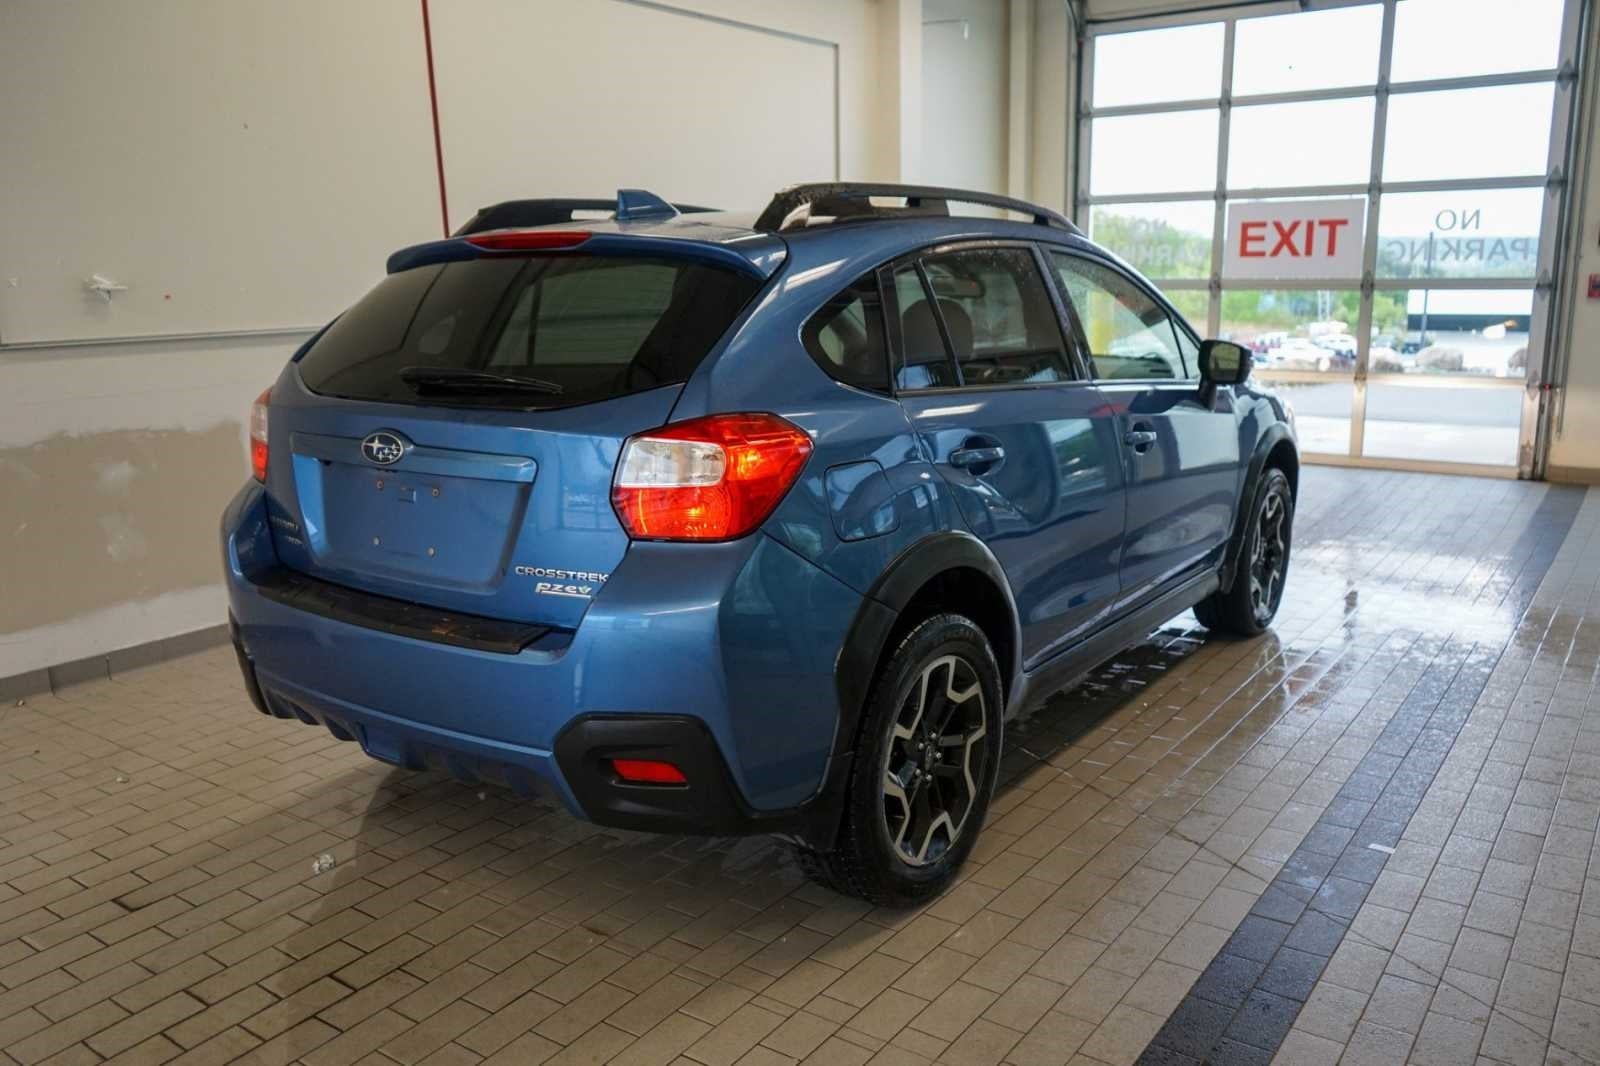 2016 Subaru Crosstrek Limited